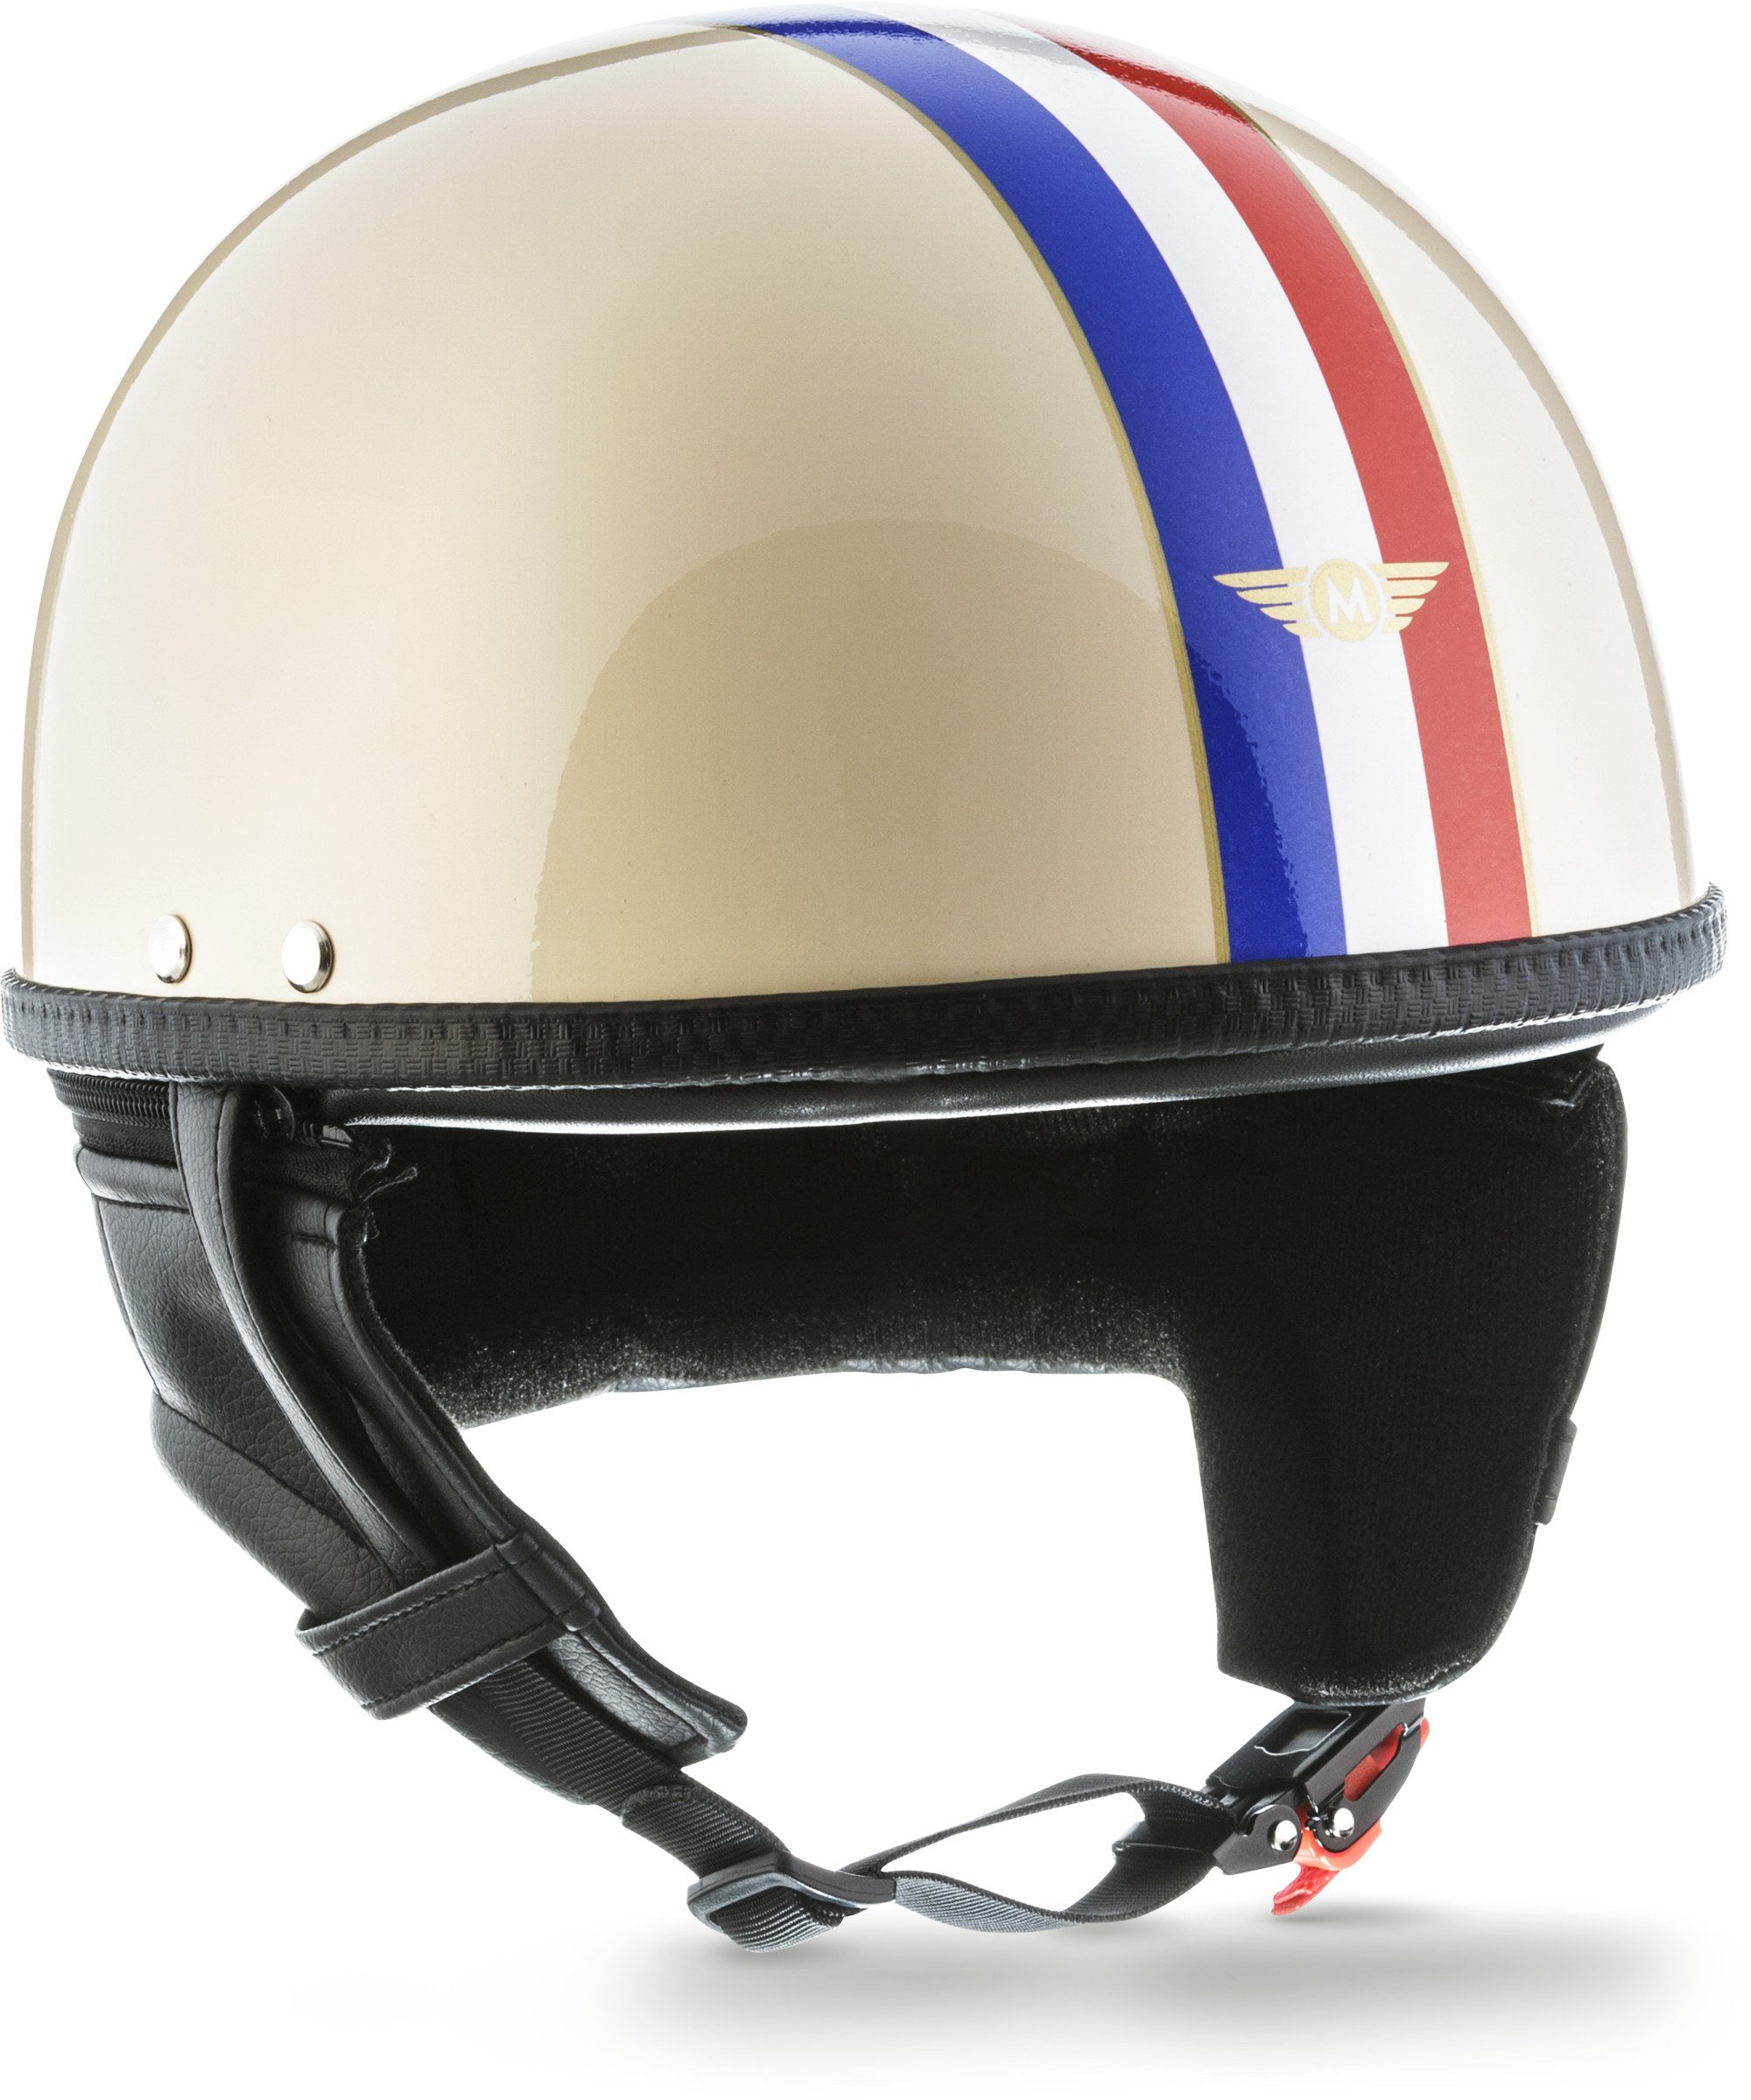 Moto Helmets® D22 „France“ · Brain-Cap · Halbschale Jet-Helm Motorrad-Helm Roller-Helm · Fiberglas Schnellverschluss SlimShell Tasche XL (61-62cm)